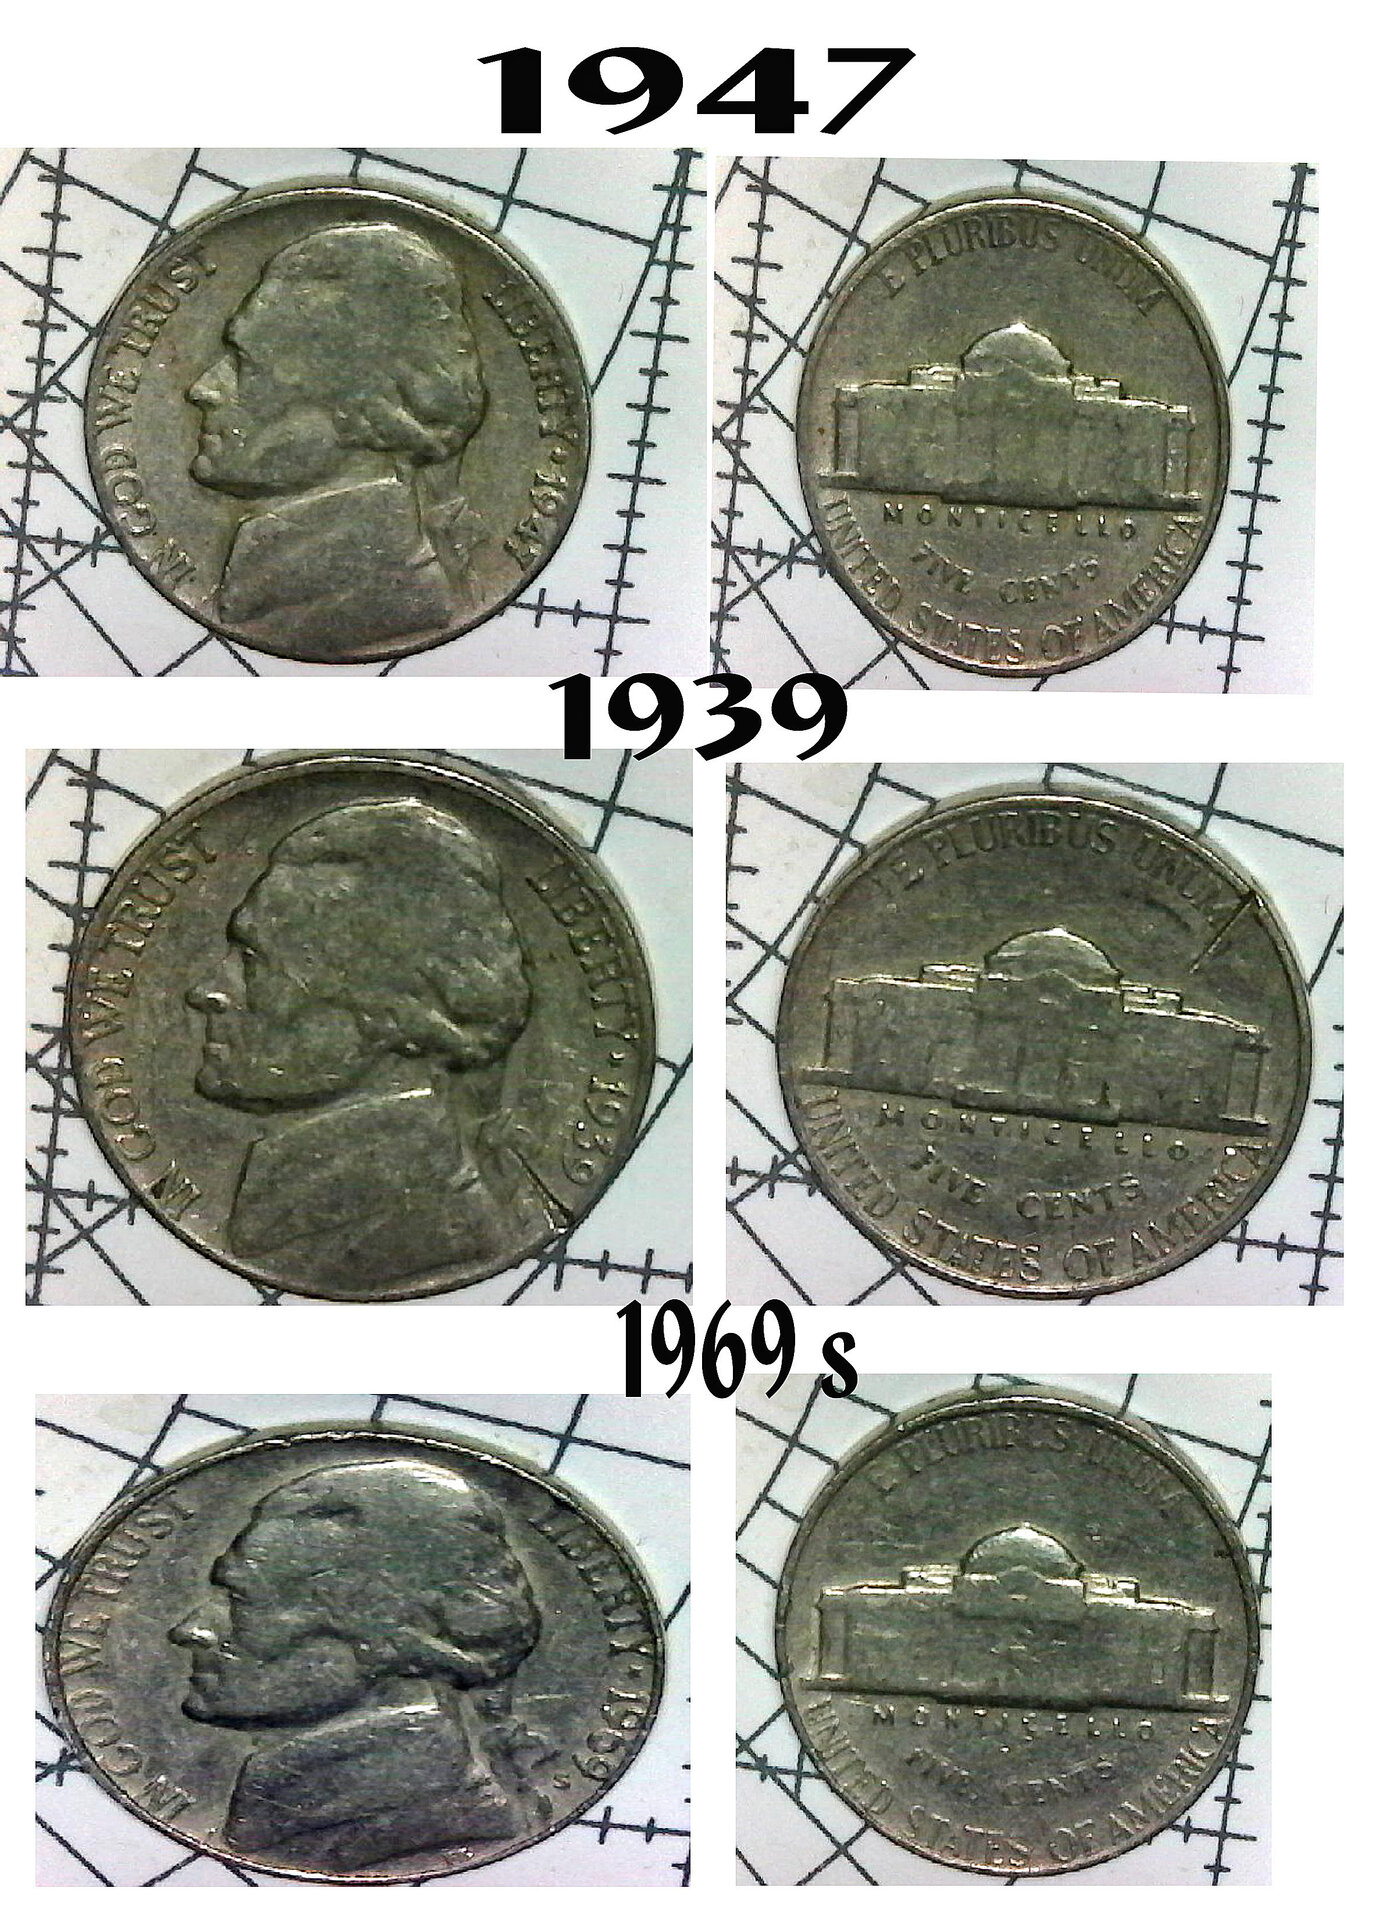 1947 - 39 - 69s.jpg